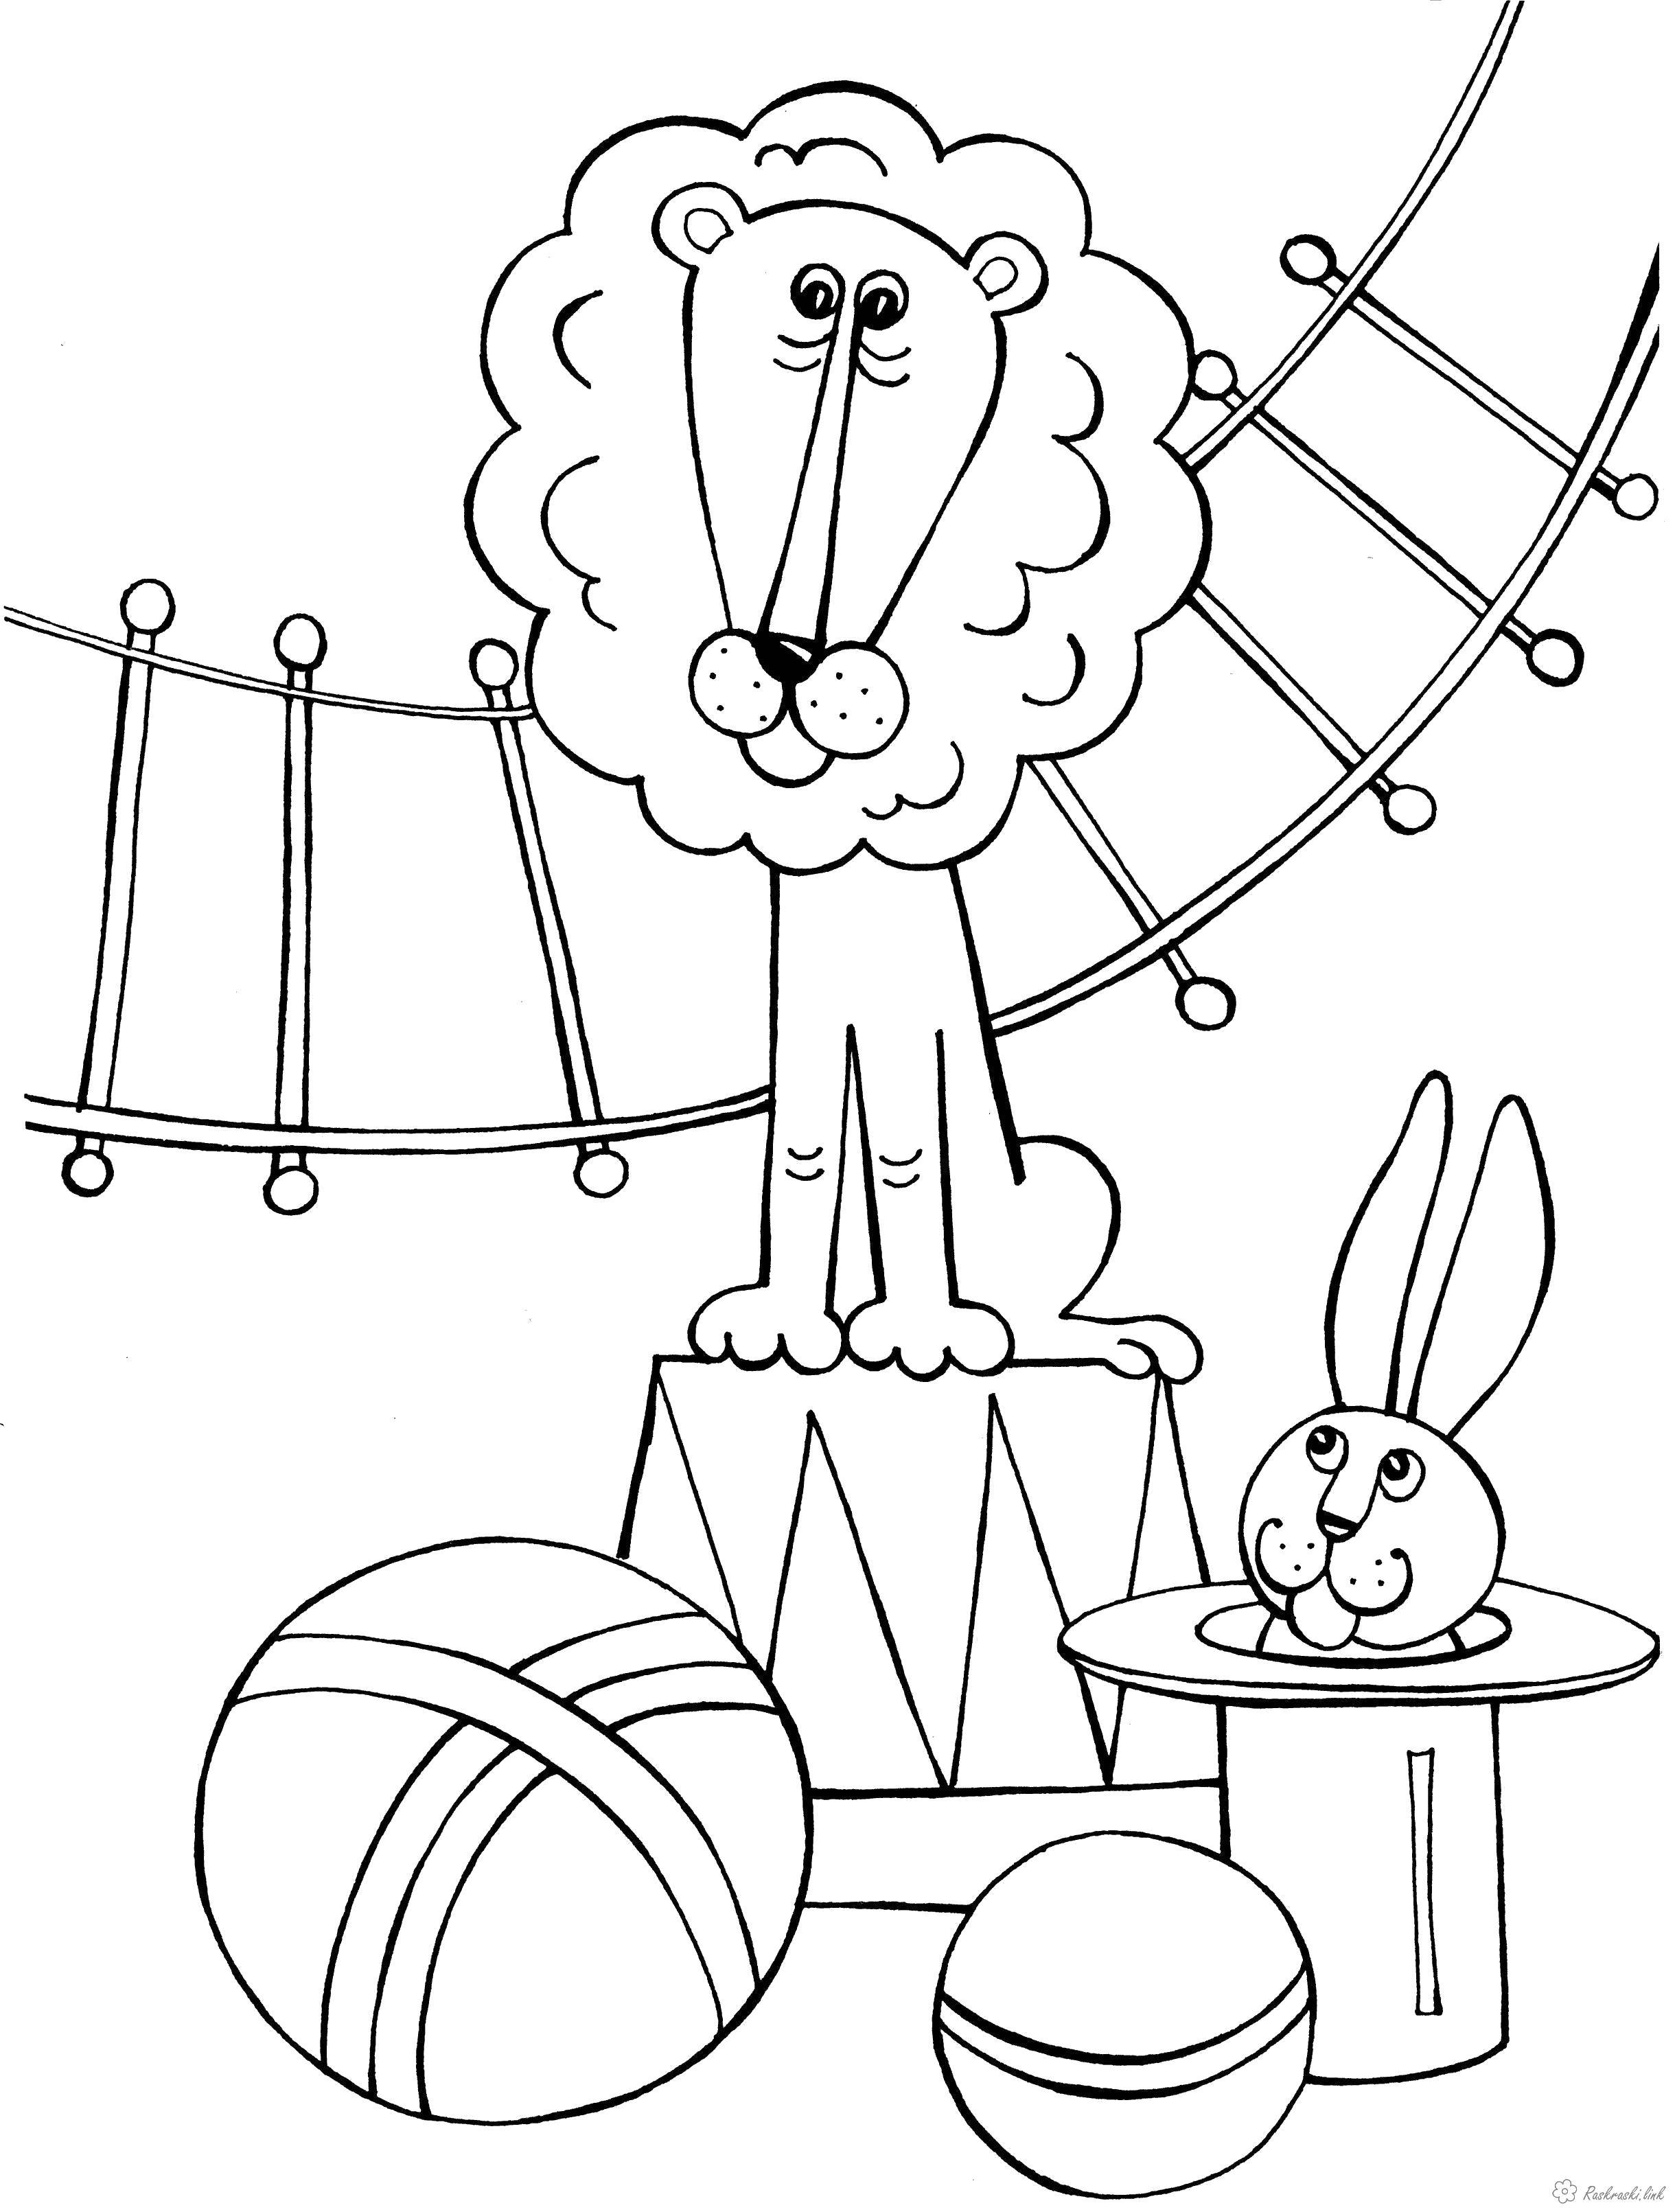 Coloring Lion izacic. Category Cartoon character. Tags:  Cartoon character.